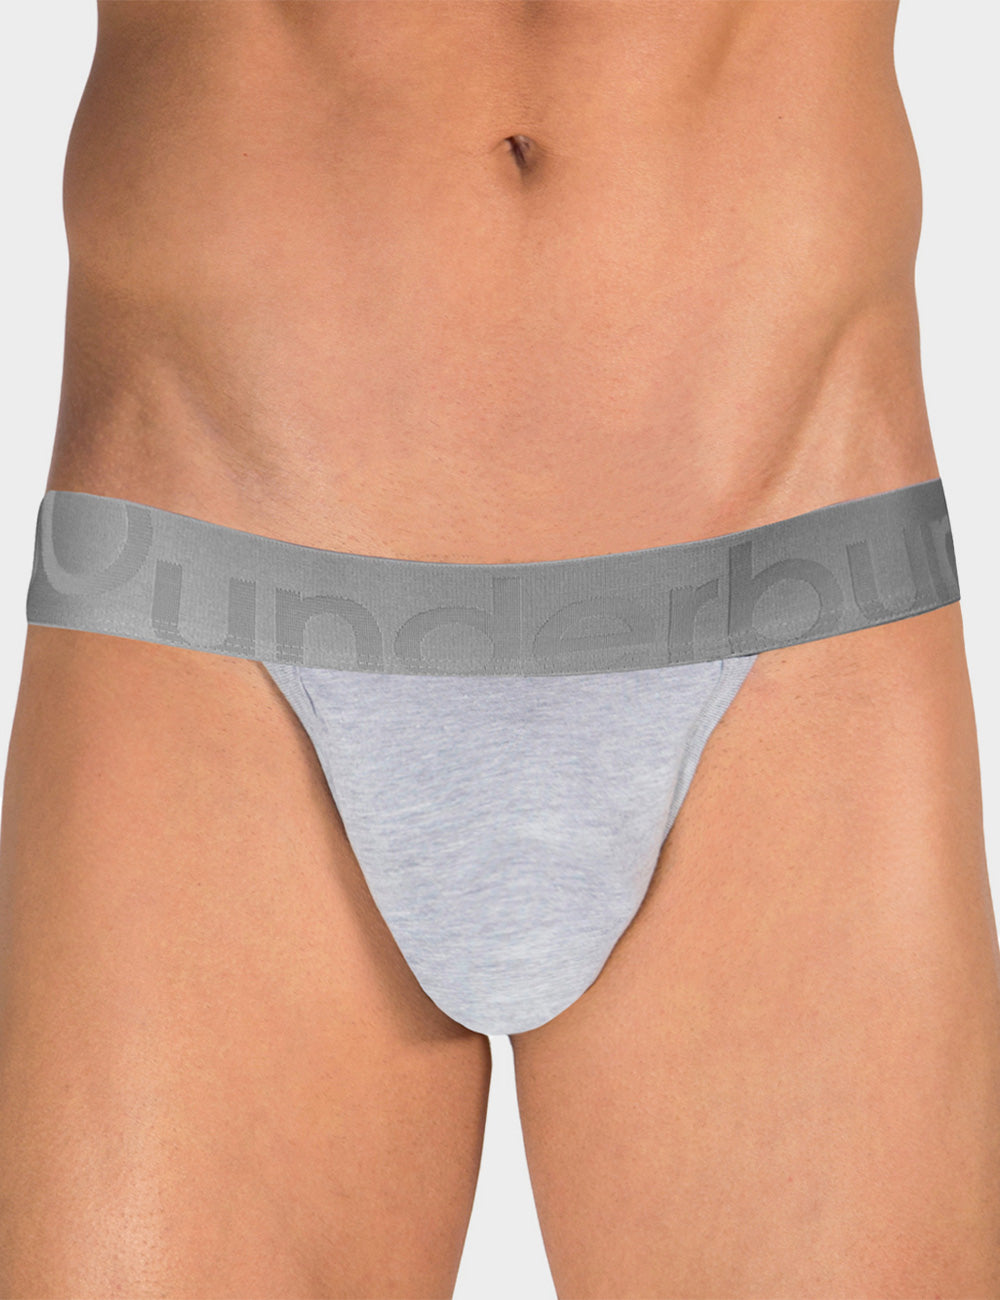 Rounderbum Jock & Thong - Men Underwear, Shapewear, Swimwear